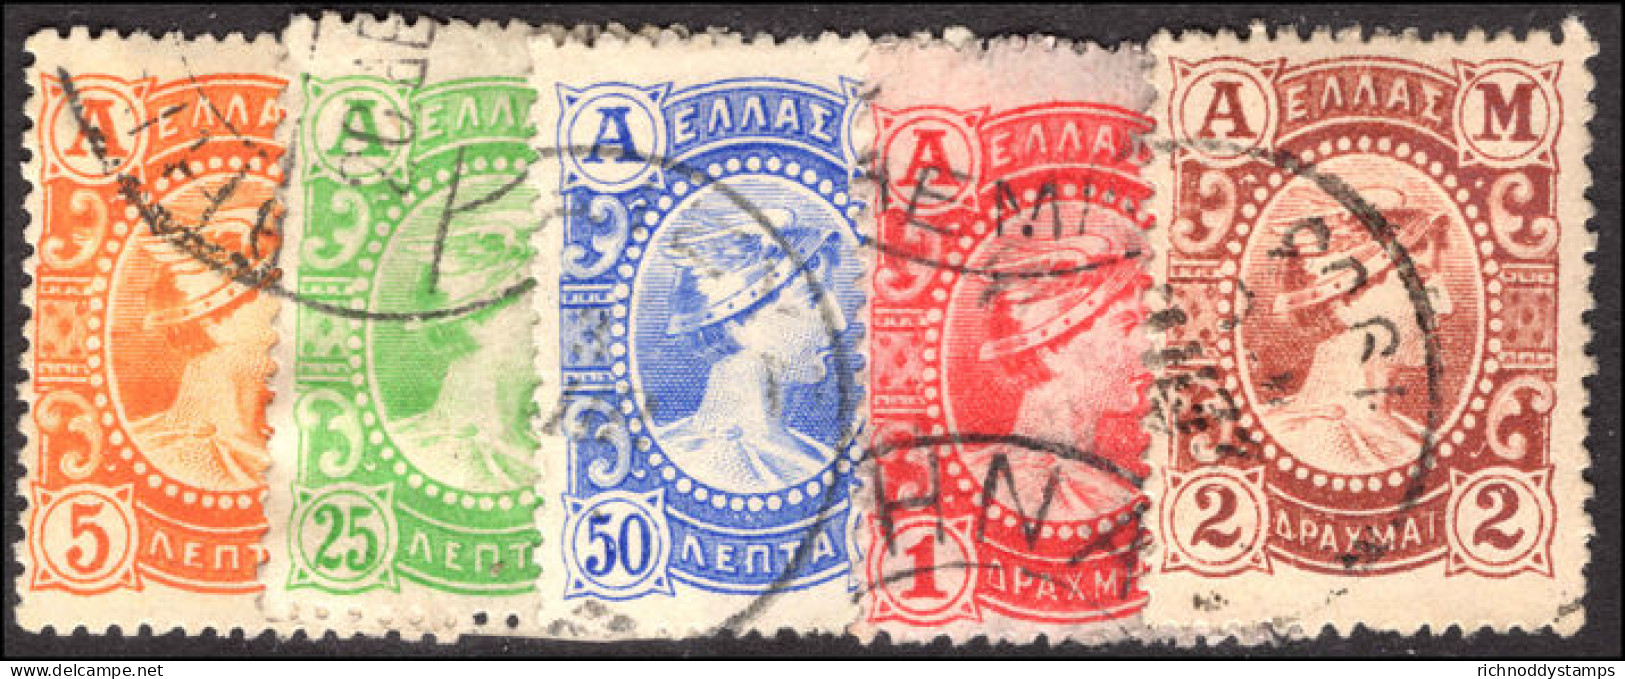 Greece 1902 Hermes Set Fine Used. - Used Stamps